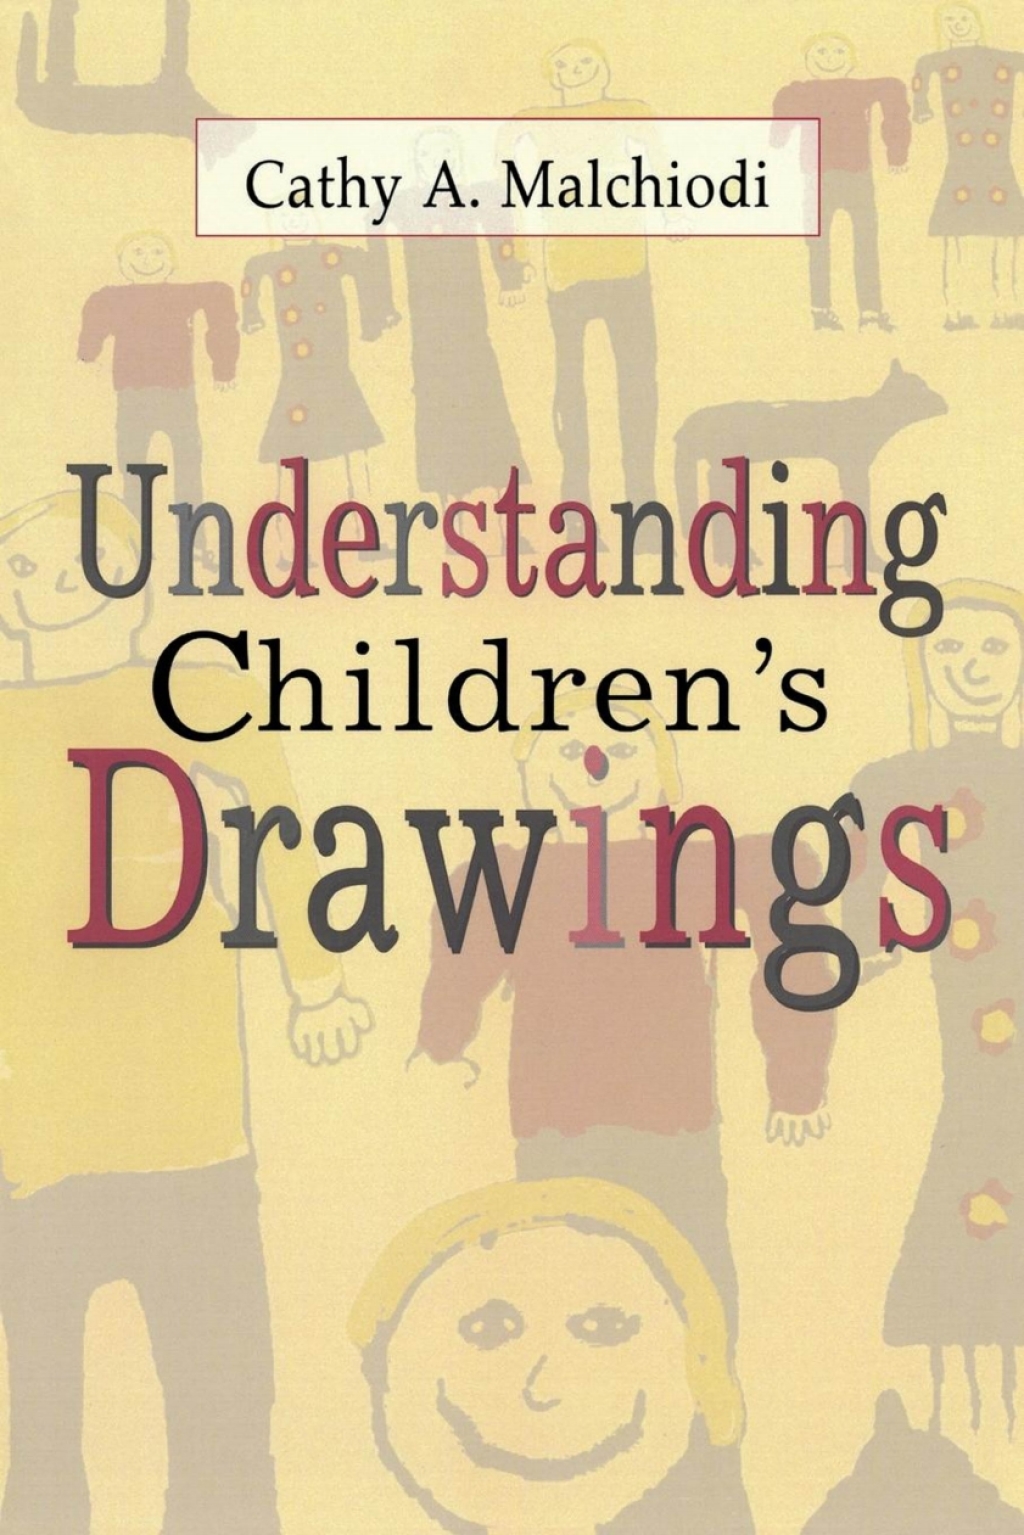 Understanding Children's Drawings (eBook) - Cathy A. Malchiodi